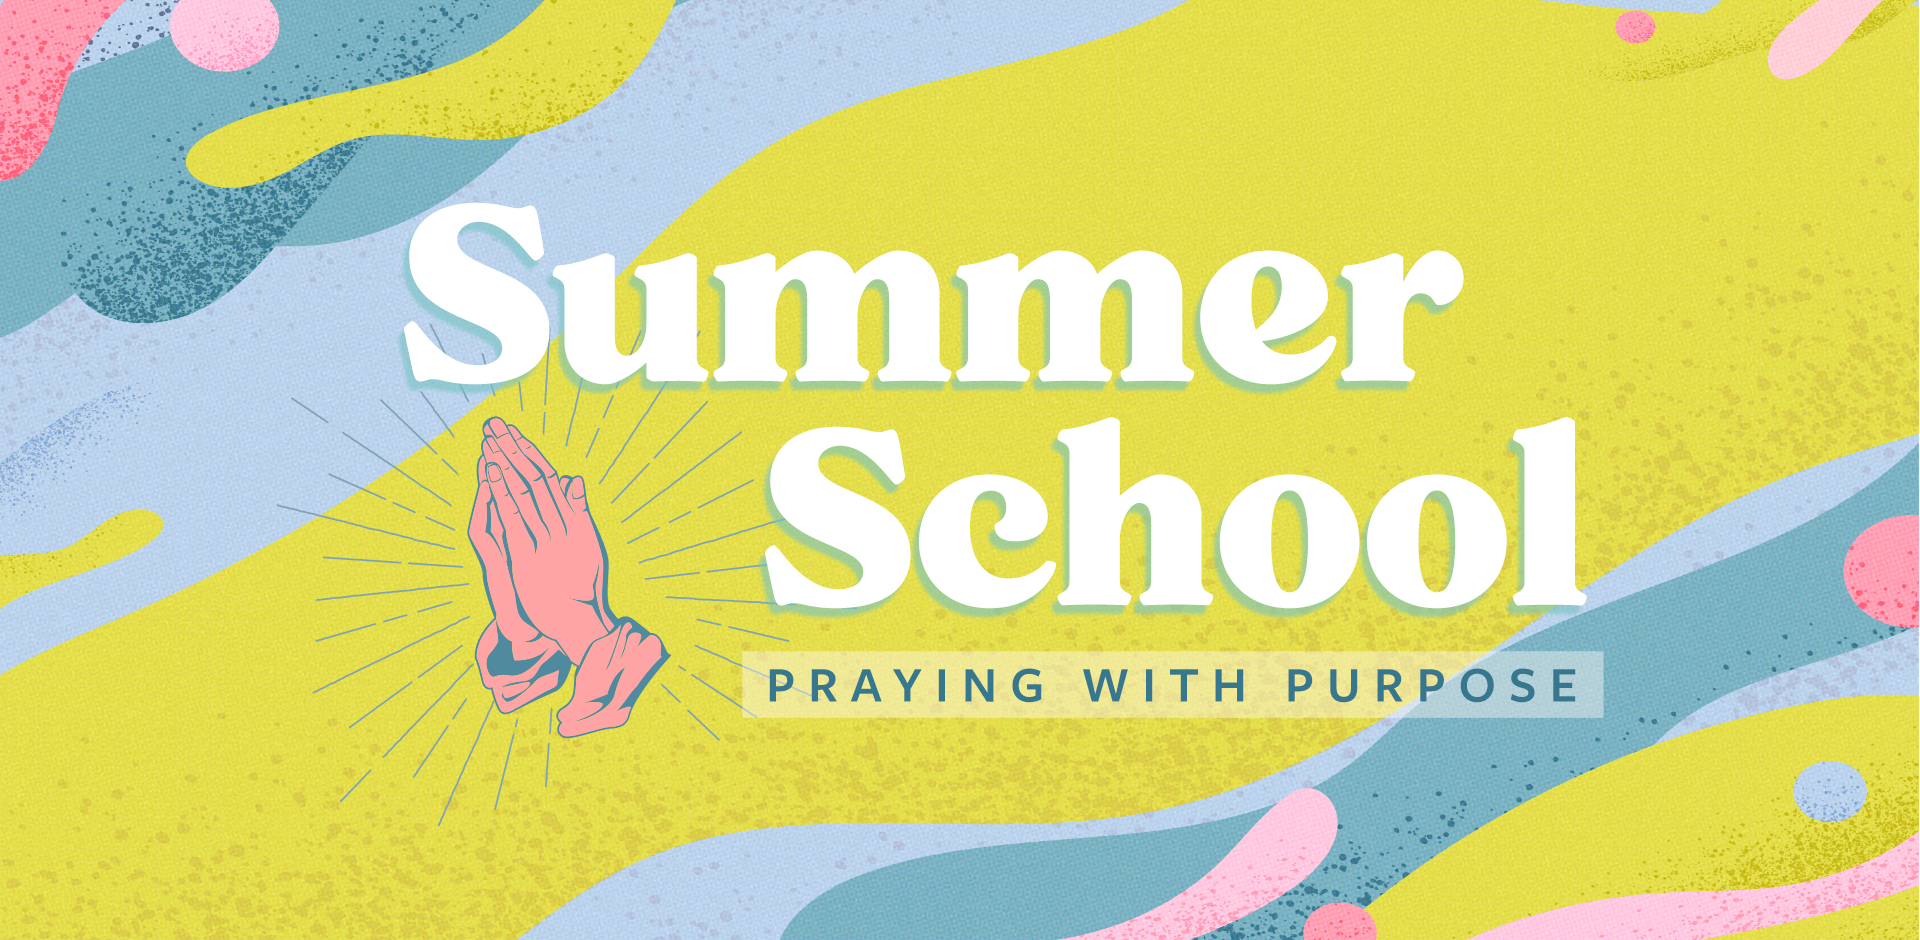 Summer School - Praying with Purpose